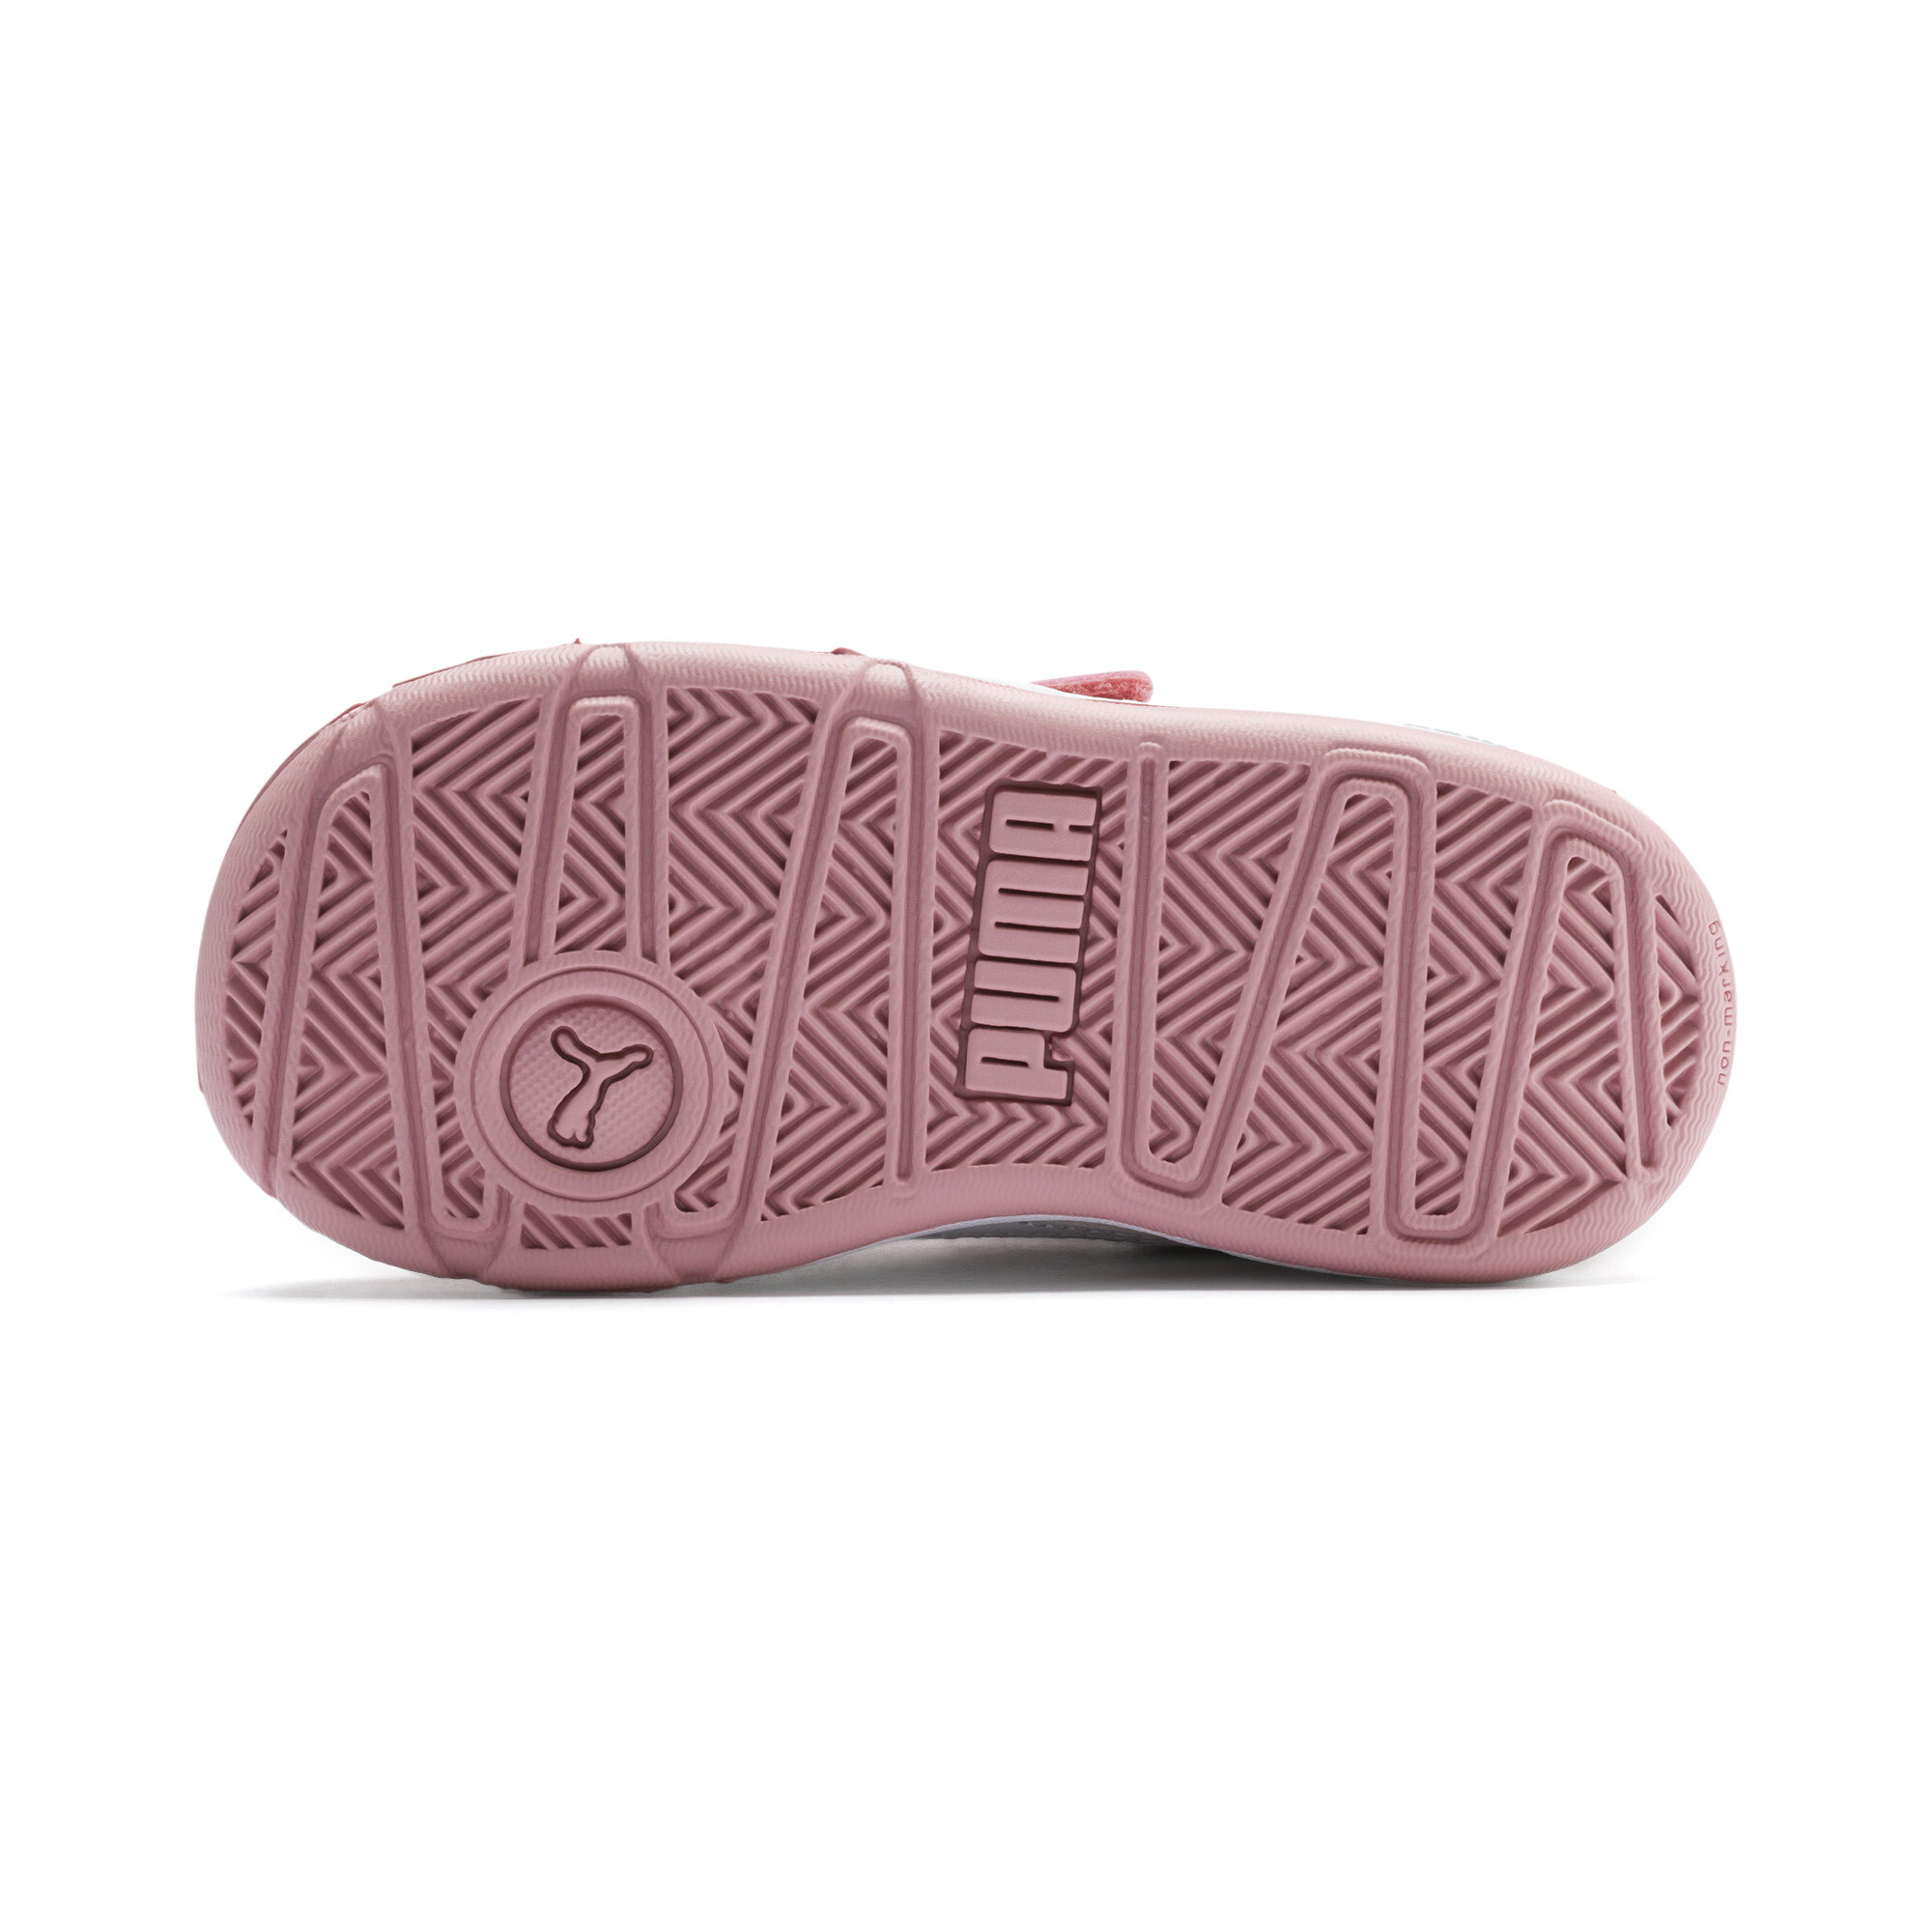 Puma Stepfleex 2 SL VE V Babies' Trainers, Pink, Size 21, Shoes